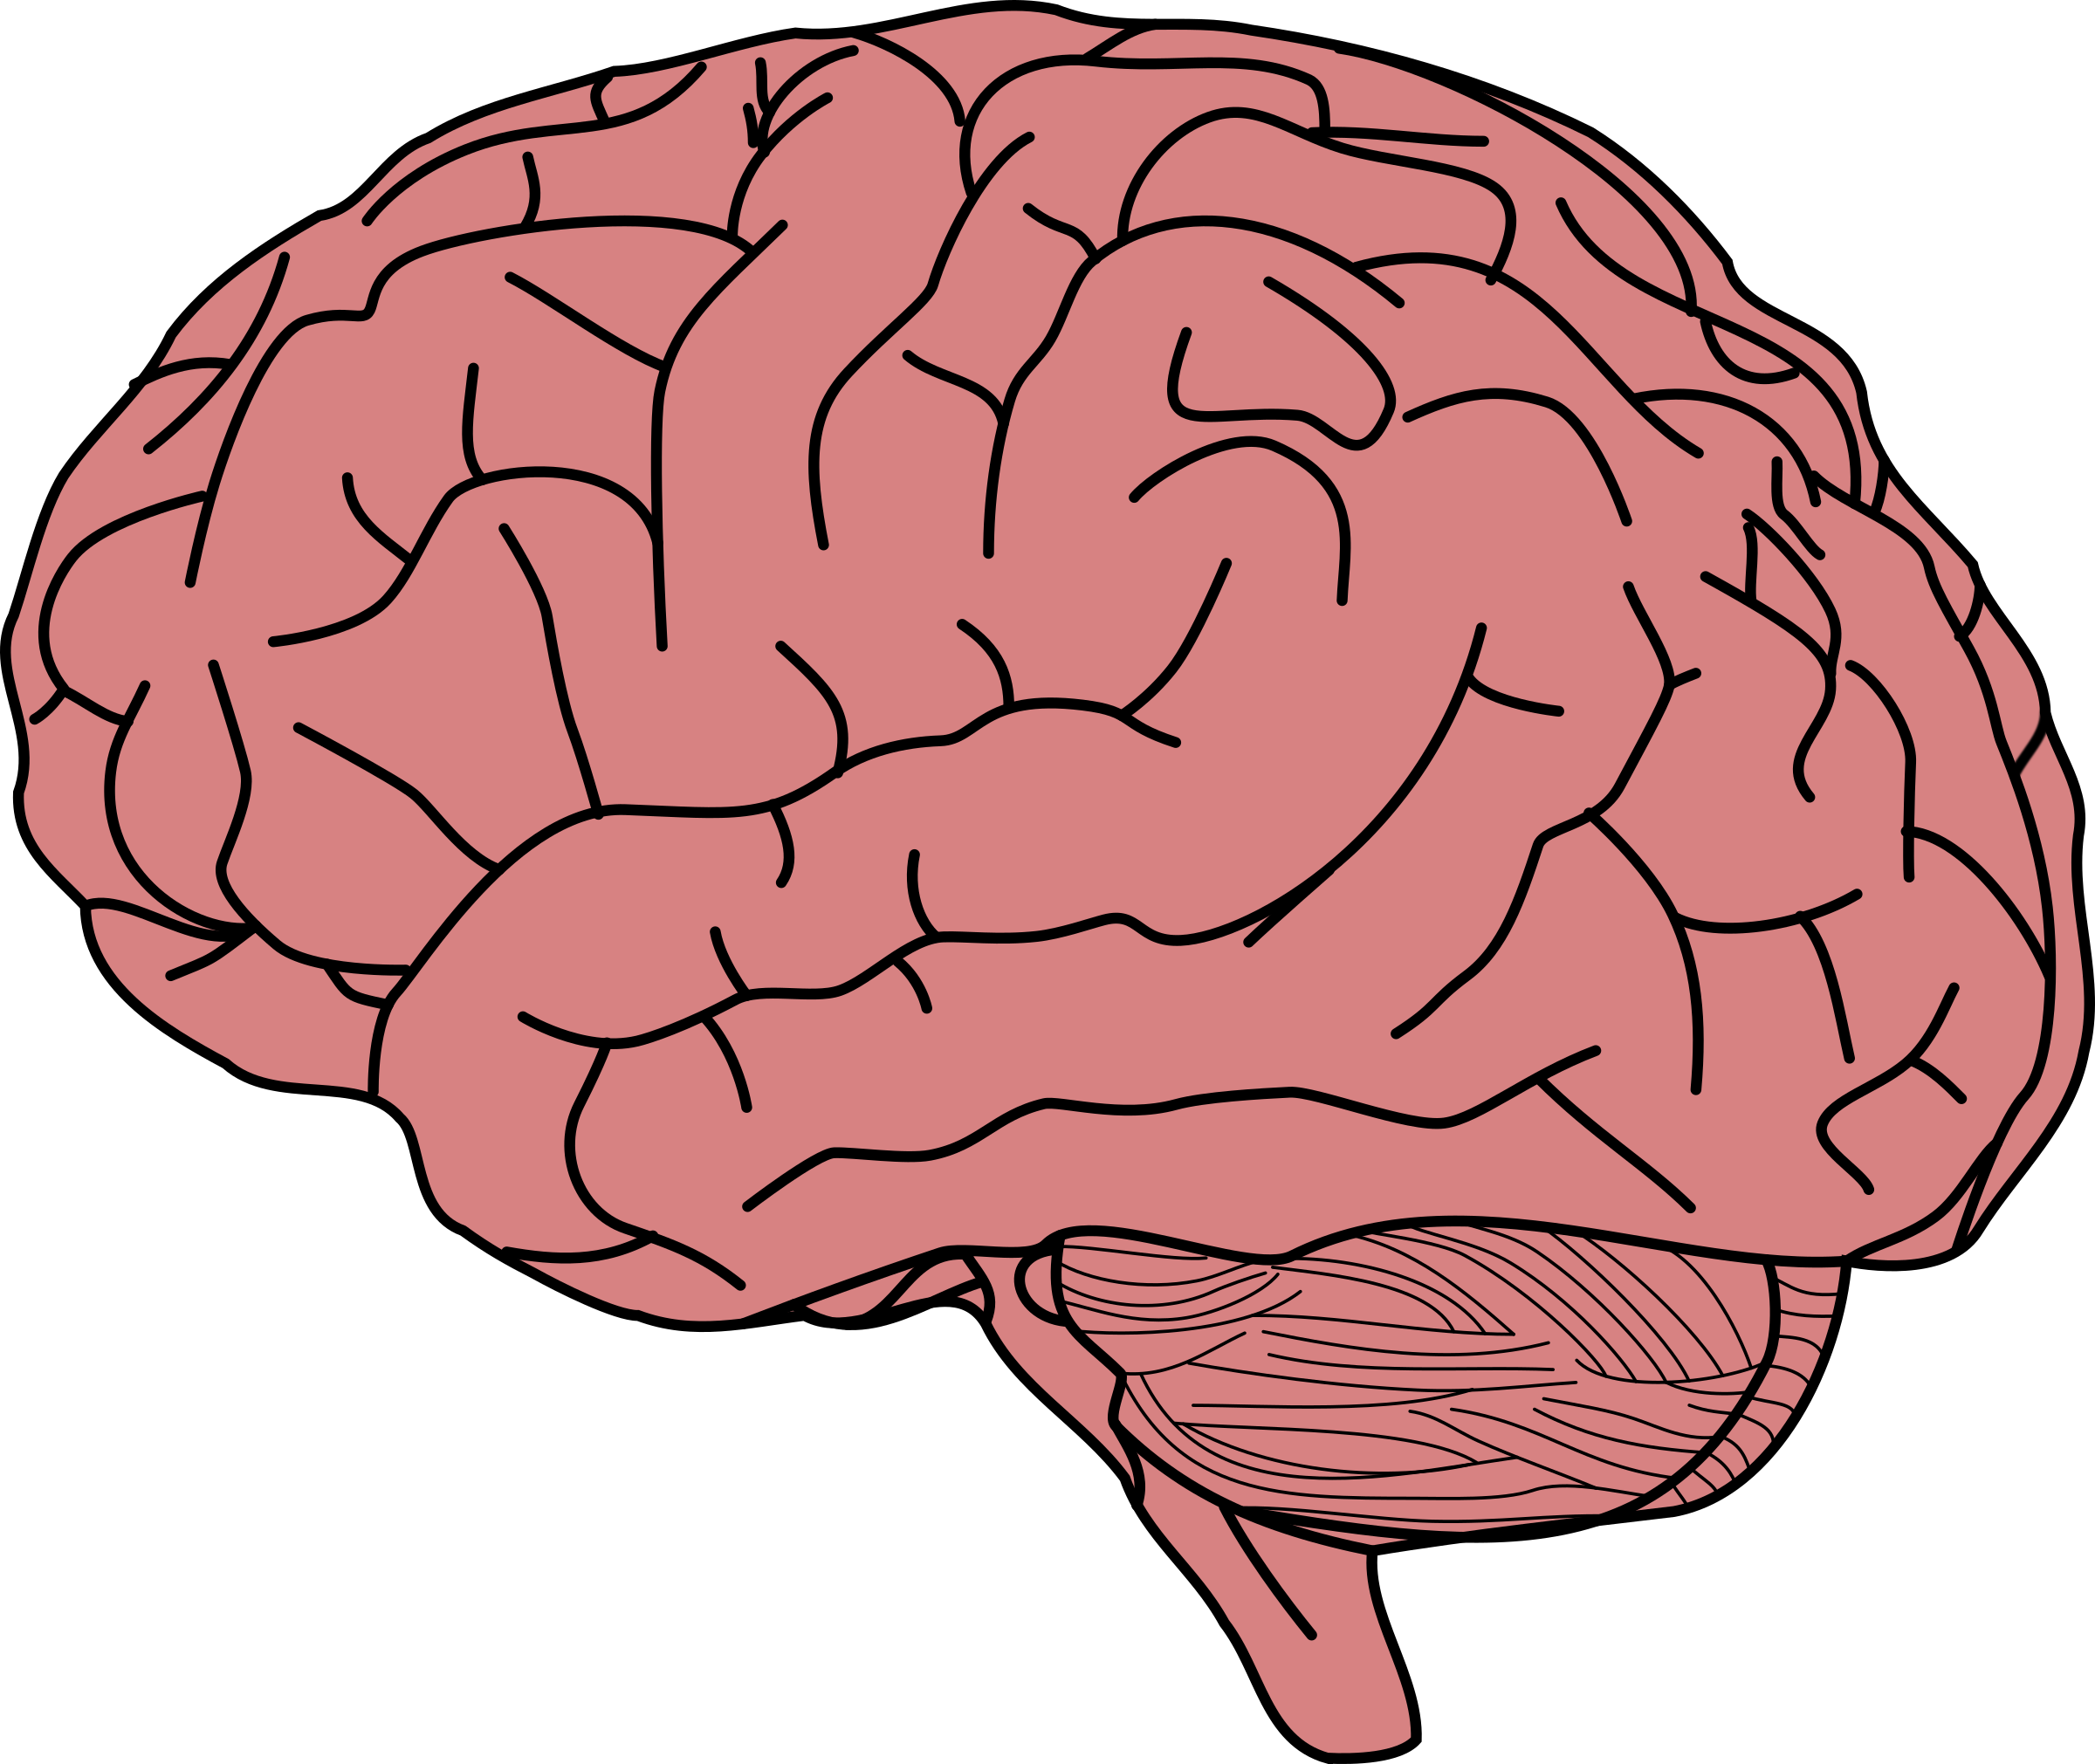 Photo PNG del cerebro humano